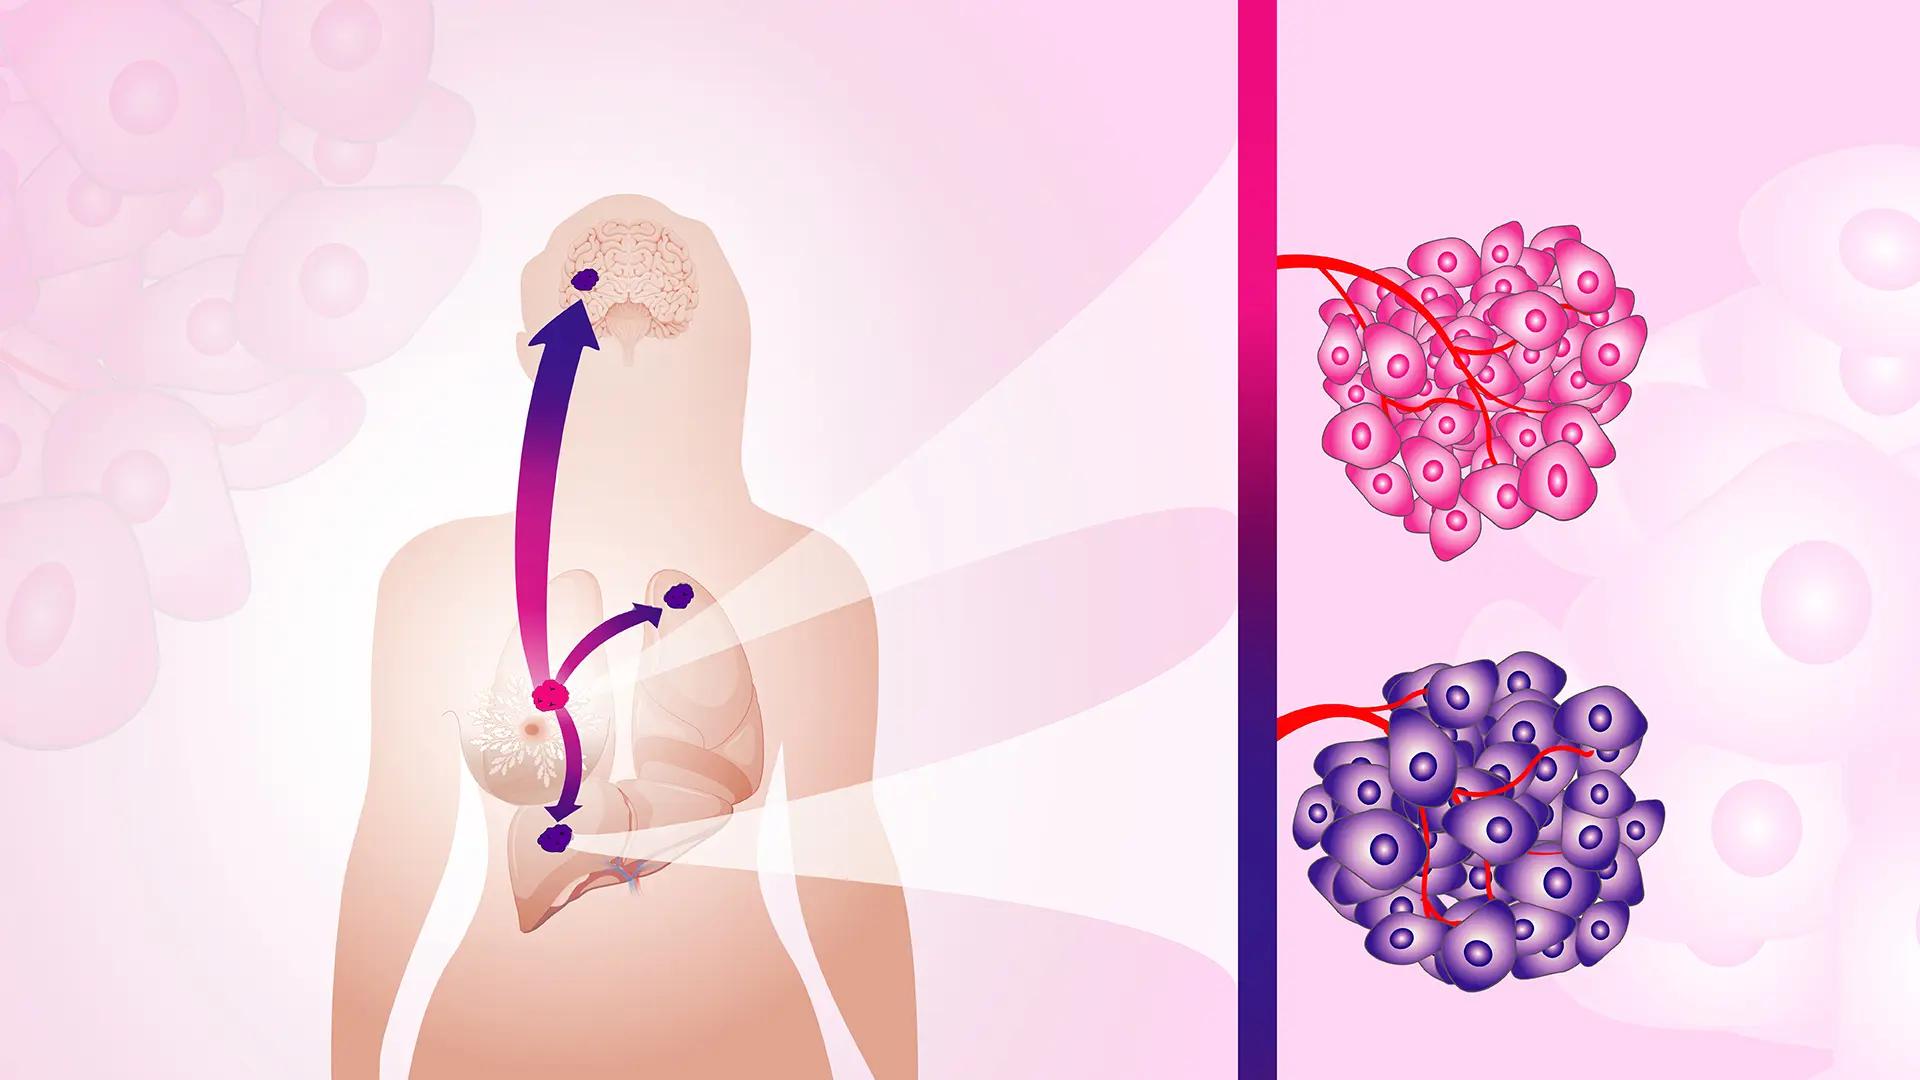 Illustration av cancercellers spridning i kroppen